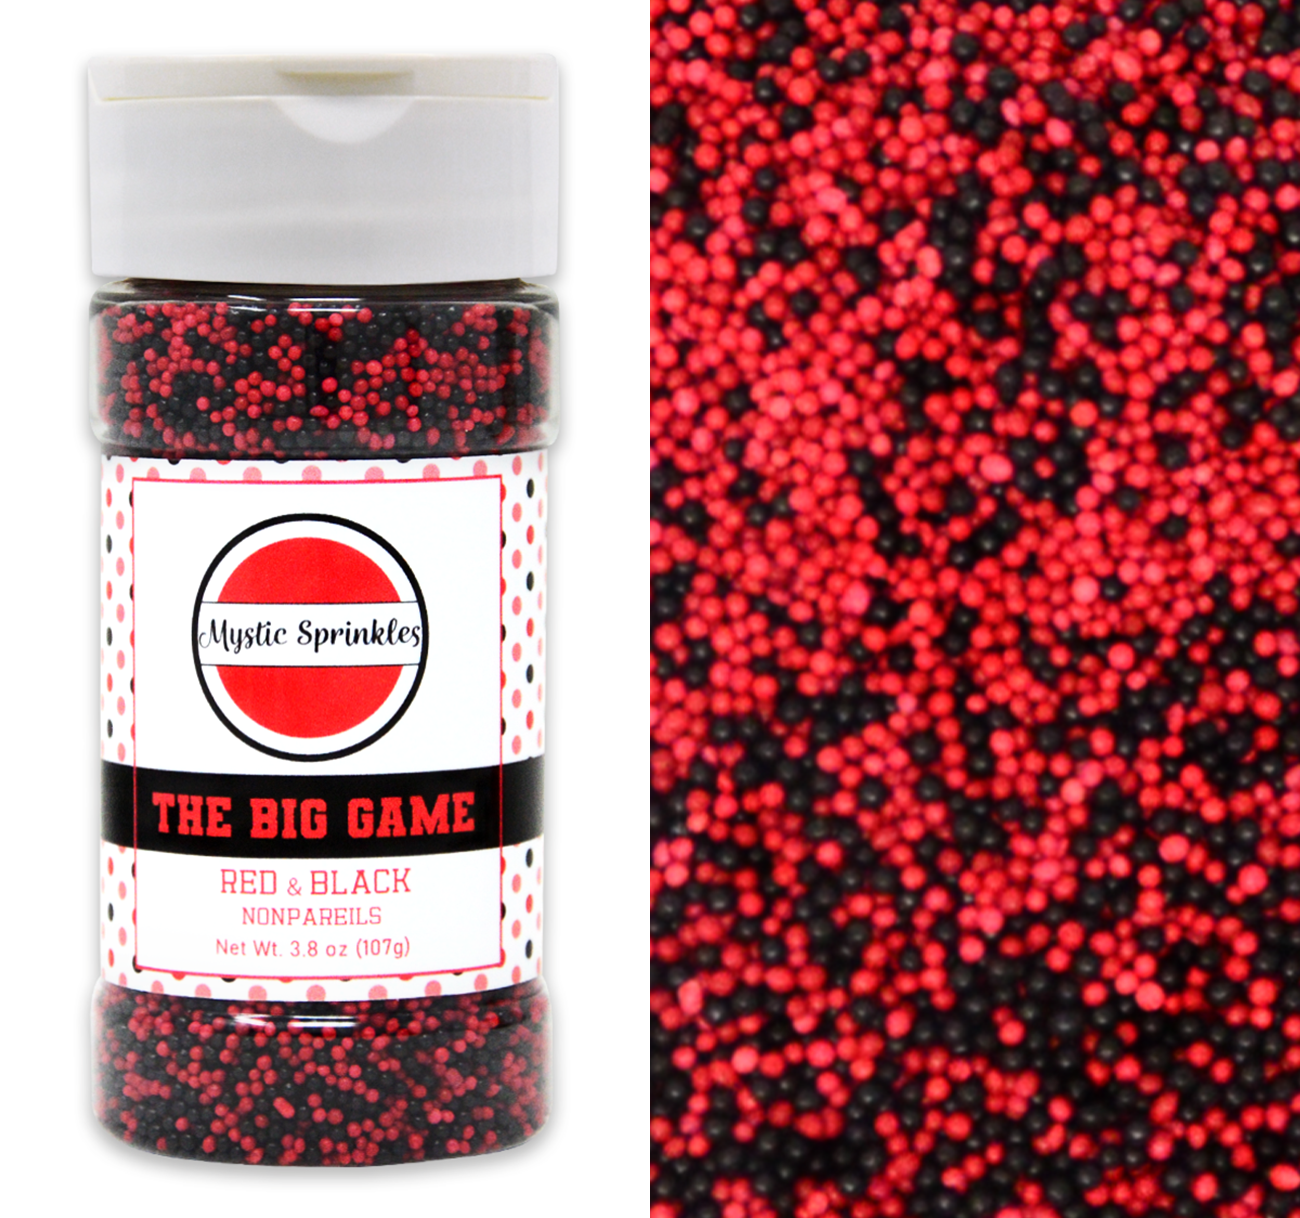 The Big Game: Red & Black Nonpareil Mix 3.8oz